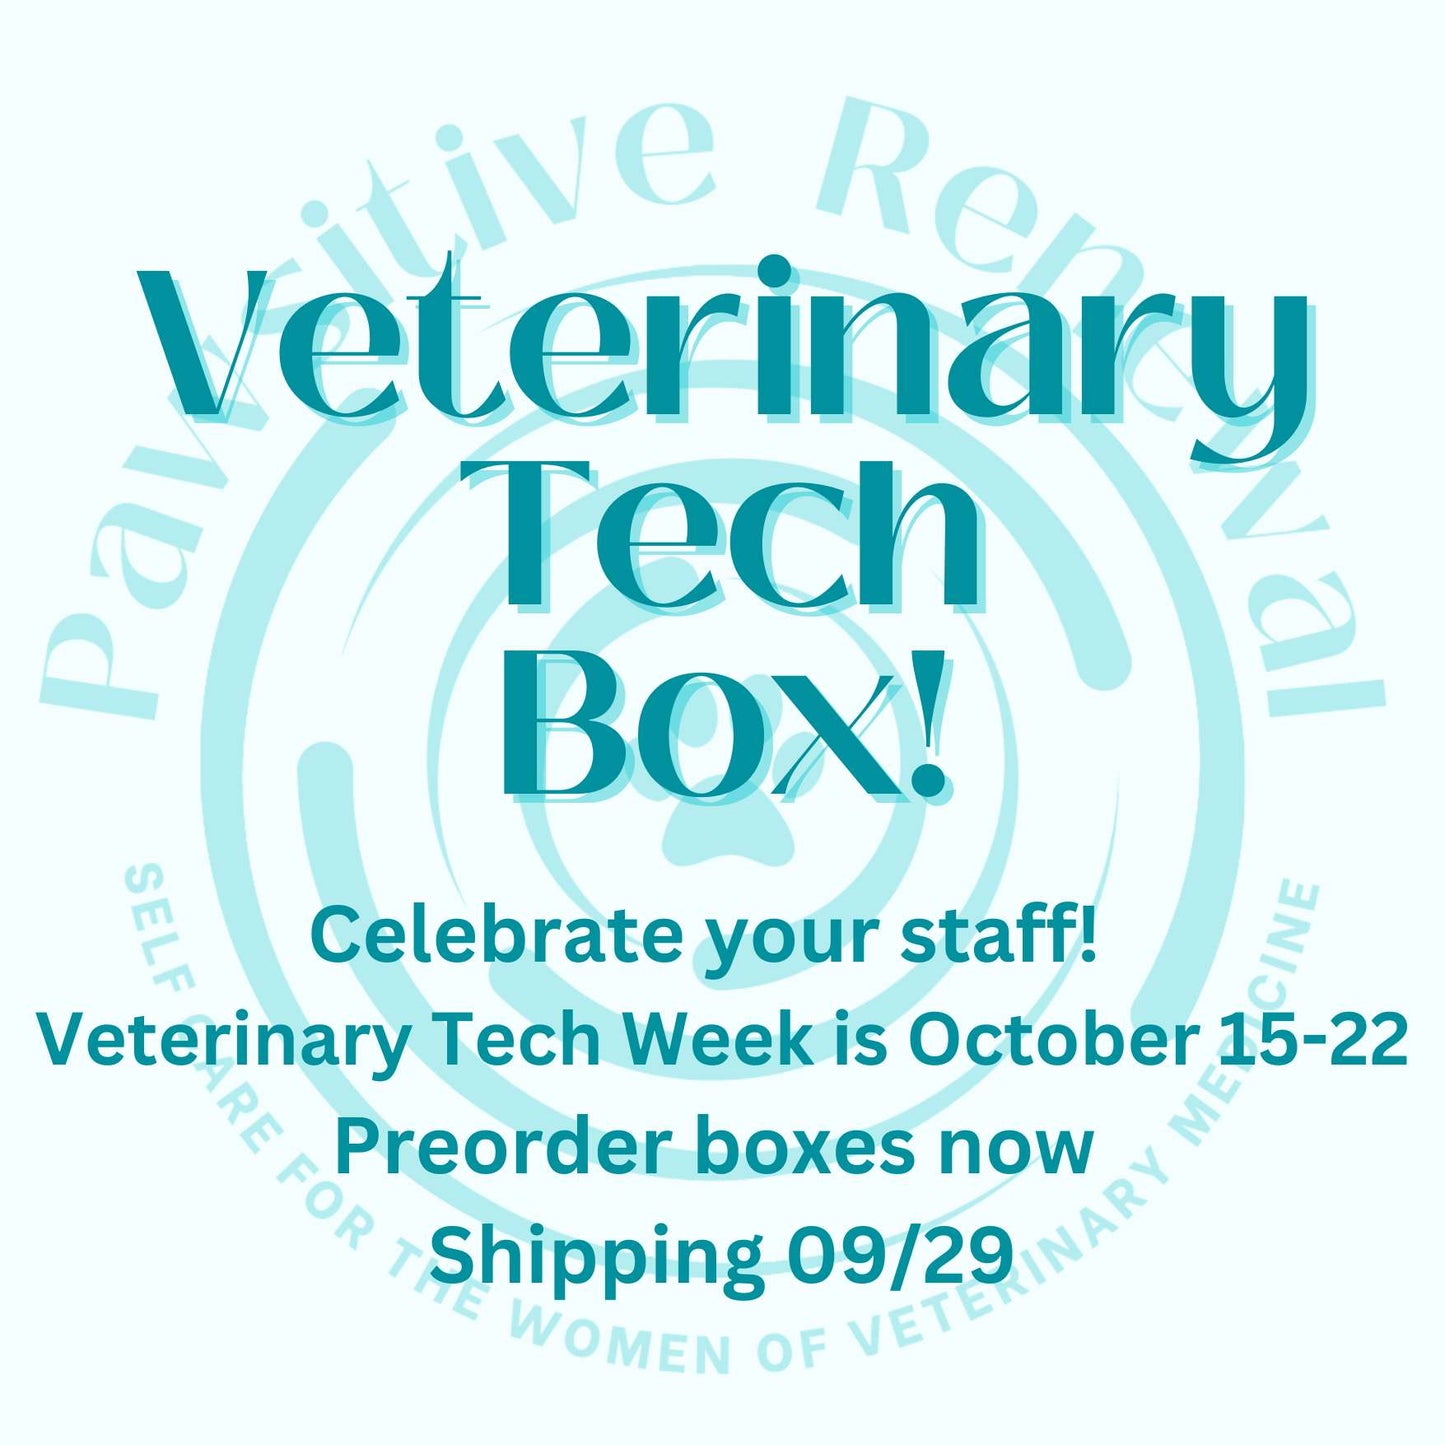 Veterinary Tech Pawsitive Renewal Box - T shirt size LARGE